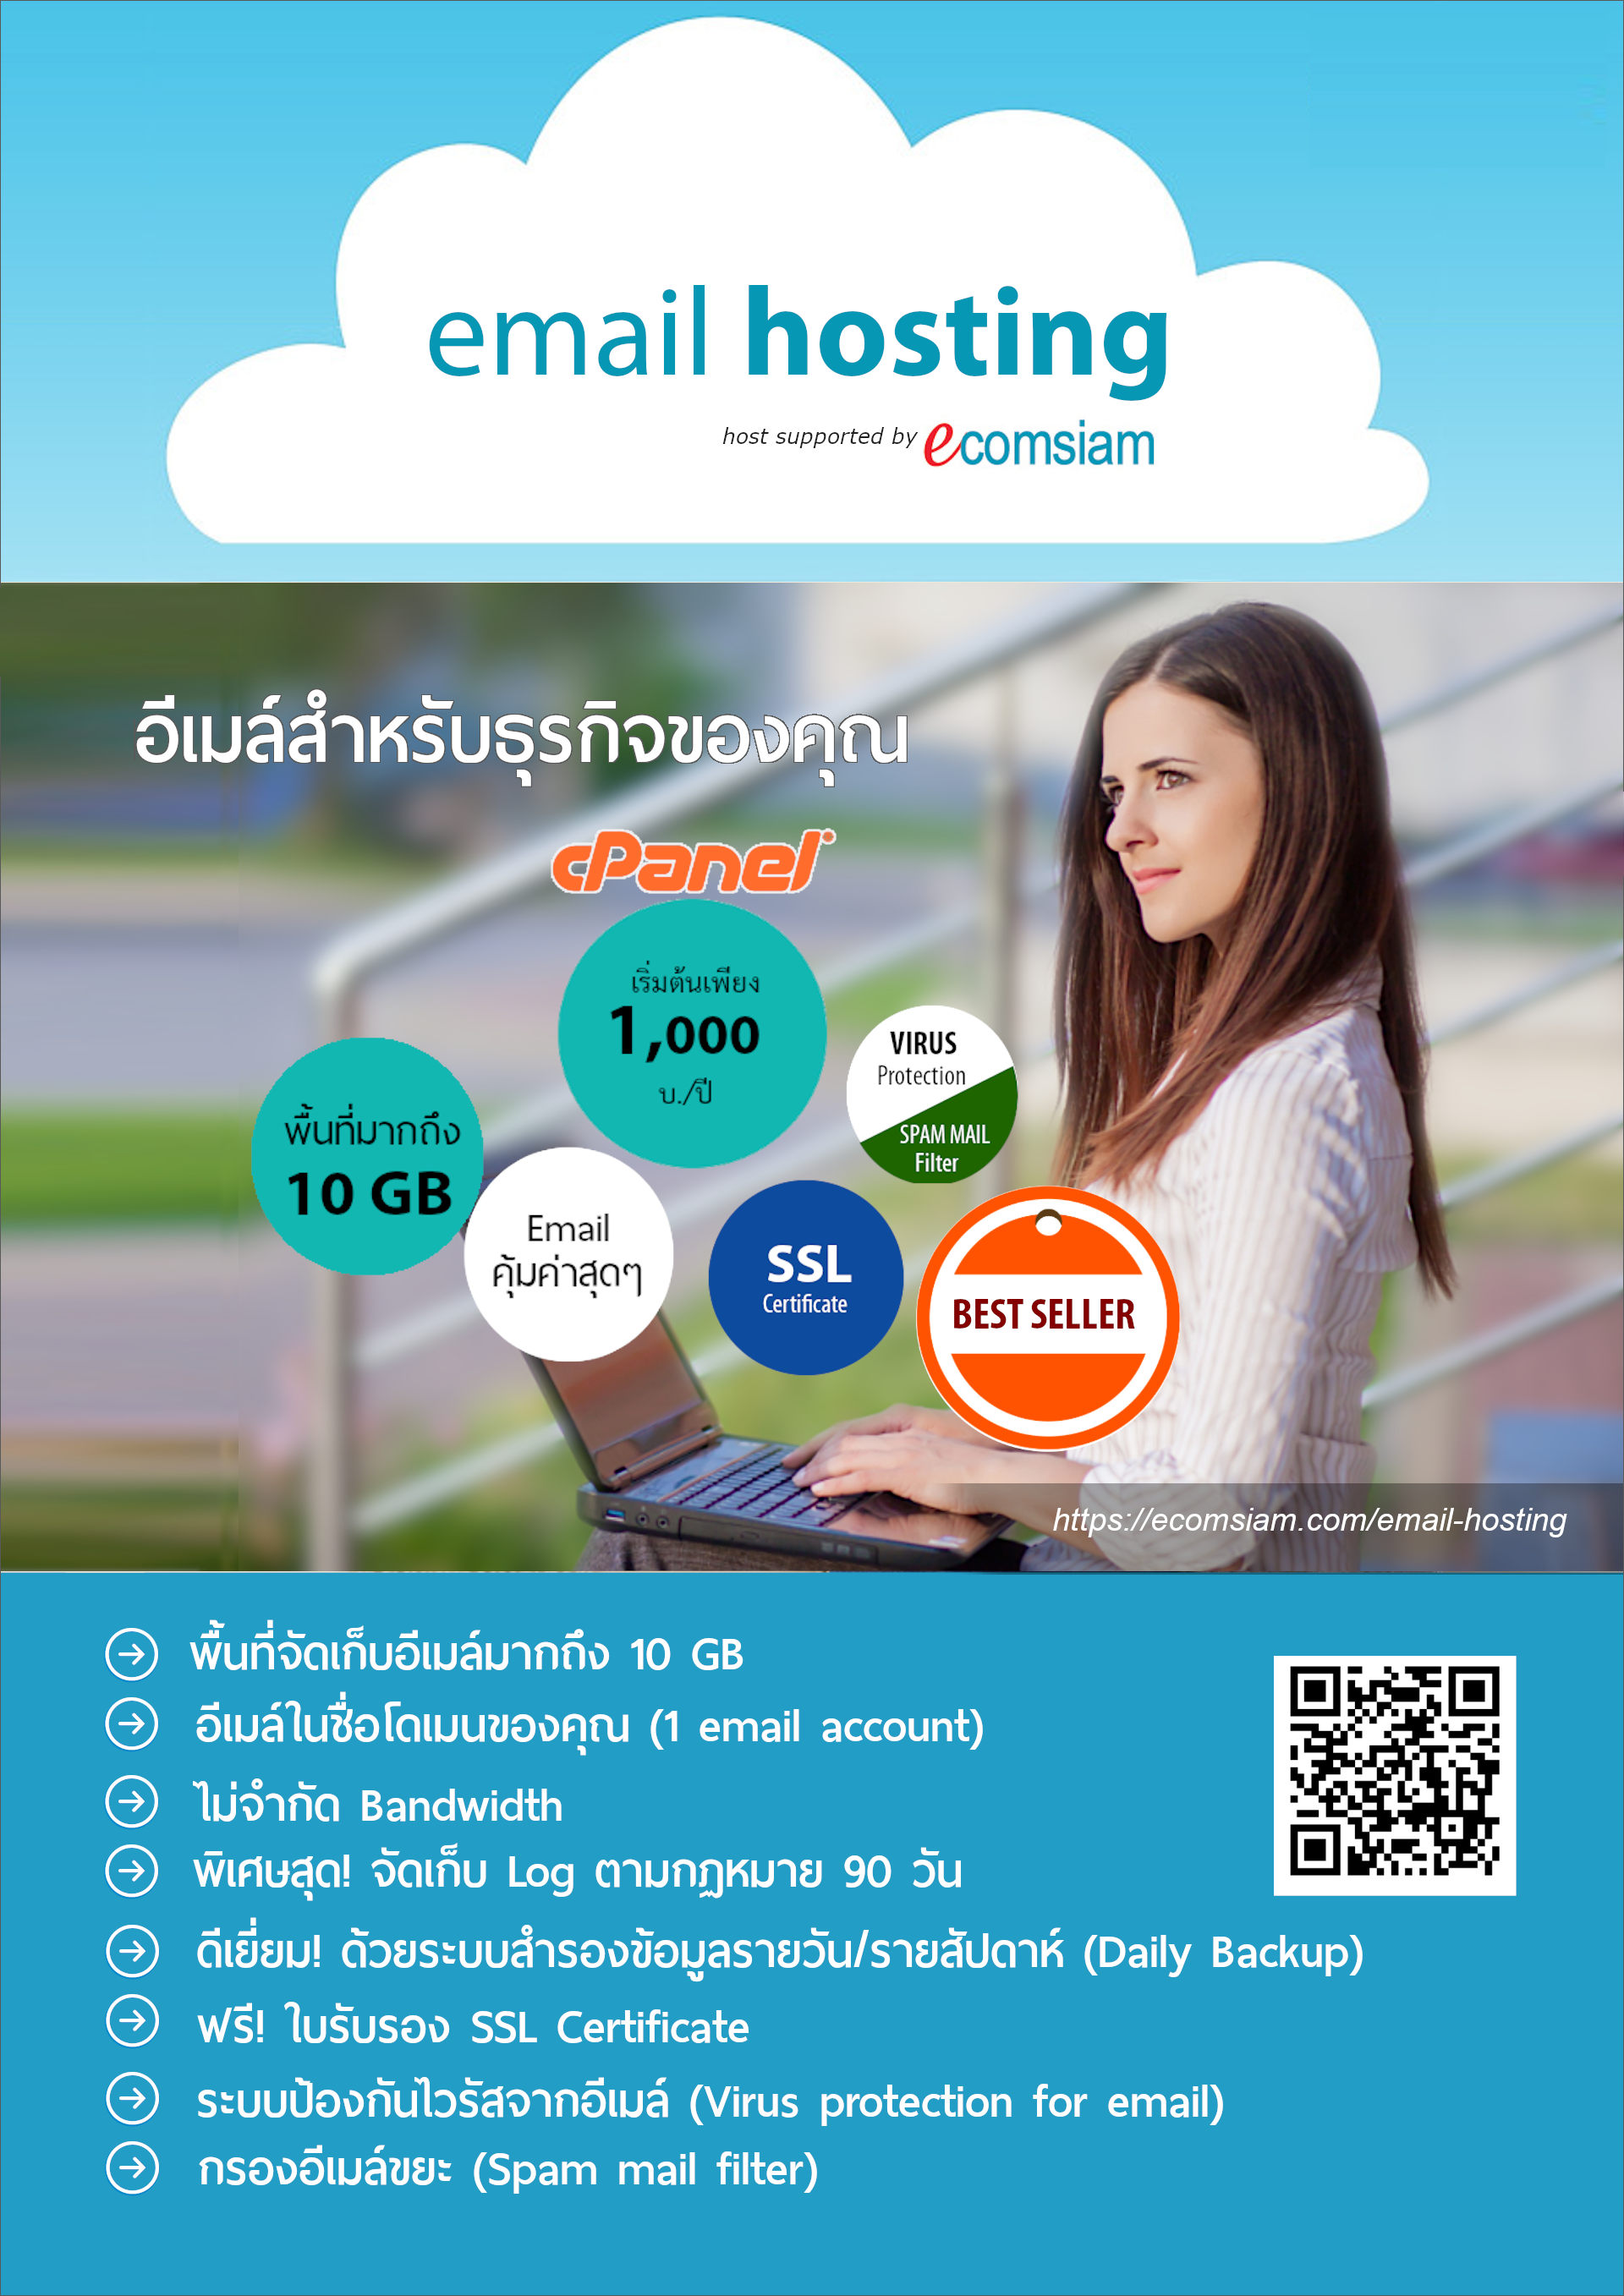 โบรชัวร์แนะนำบริการ  email Hosting thai คุณภาพ บริการดี พื้นที่มาก  คุณภาพสูง  hosting พื้นที่มาก บริการดี  ฟรี SSL ระบบควบคุมจัดการ Web hosting ไทย ด้วย Cpanel ที่ง่าย สะดวก และปลอดภัย hosting เพื่อใช้งานอีเมล์ สำหรับธุรกิจของคุณ มีระบบเก็บ log file ตามกฏหมาย มีความปลอดภัยในการใช้งาน พร้อมมีระบบสำรองข้อมูลรายวัน (daily backup) และ สำรองข้อมูลรายสัปดาห์ (weekly backup) ระบบป้องกันไวรัสจากอีเมล์ (virus protection) พร้อมระบบกรองสแปมส์เมล์หรือกรองอีเมล์ขยะ (Spammail filter) เริ่มต้นเพียง 1000 บาทต่อปี   พื้นที่ 10 GB 1 email สอบถามรายละเอียดเพิ่มเติม  โทร.หาเราตอนนี้เลย  02-9682665 หรือ line : @ecomsiam โฮสติ้งคุณภาพ บริการลูกค้าดี ดูแลดี  แนะนำเว็บโฮสติ้ง โดย webhostthai.com